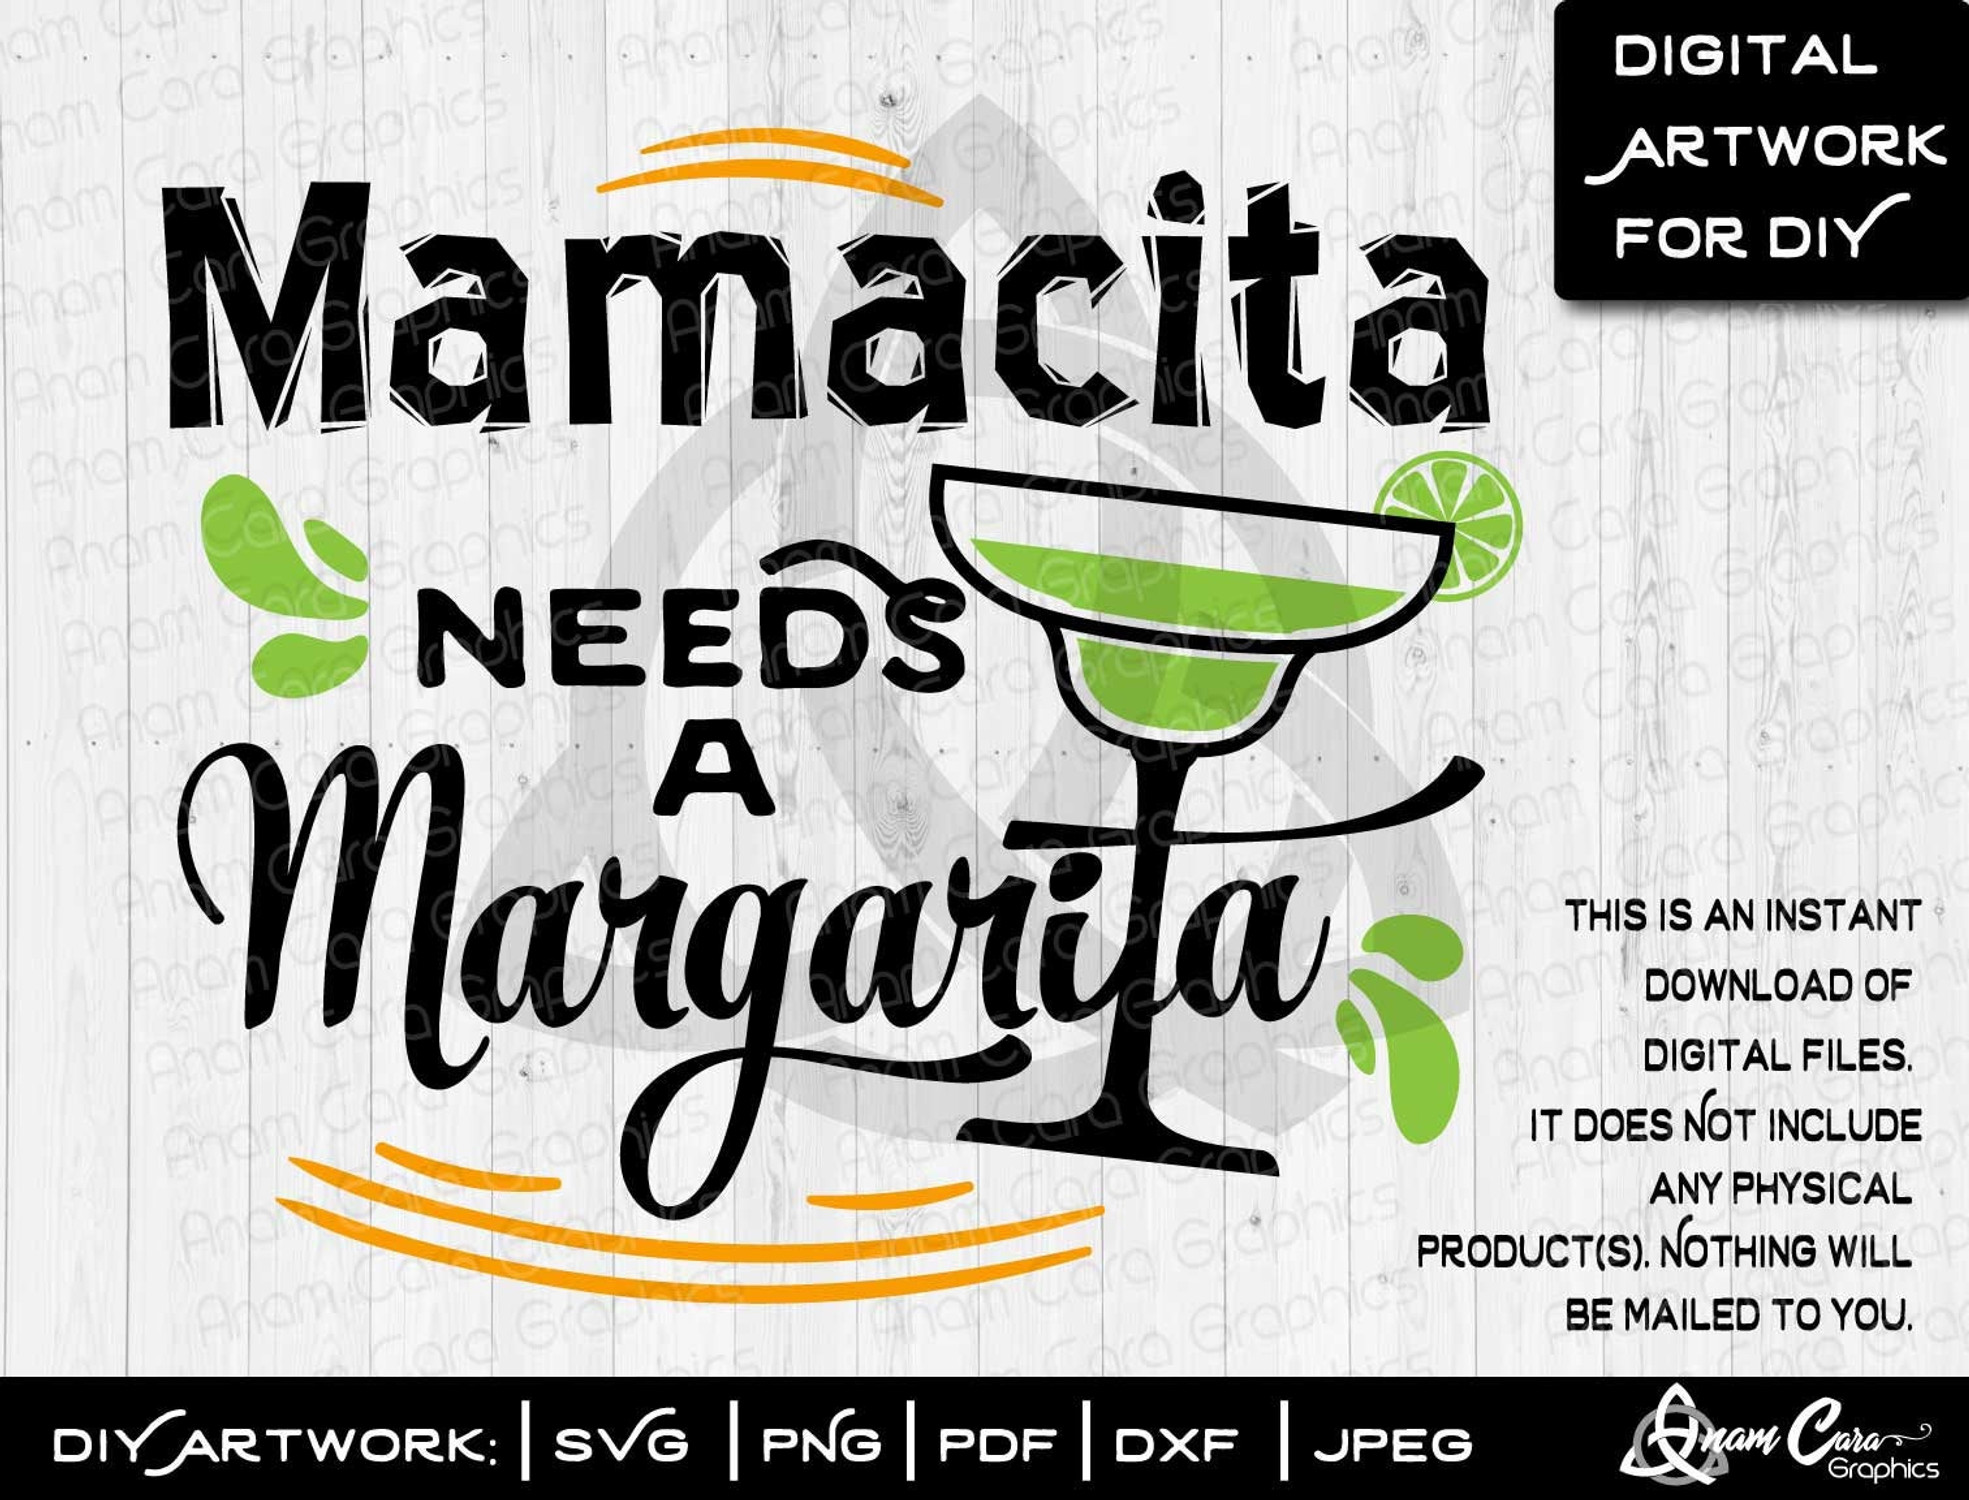 Mamacita needs a Margarita